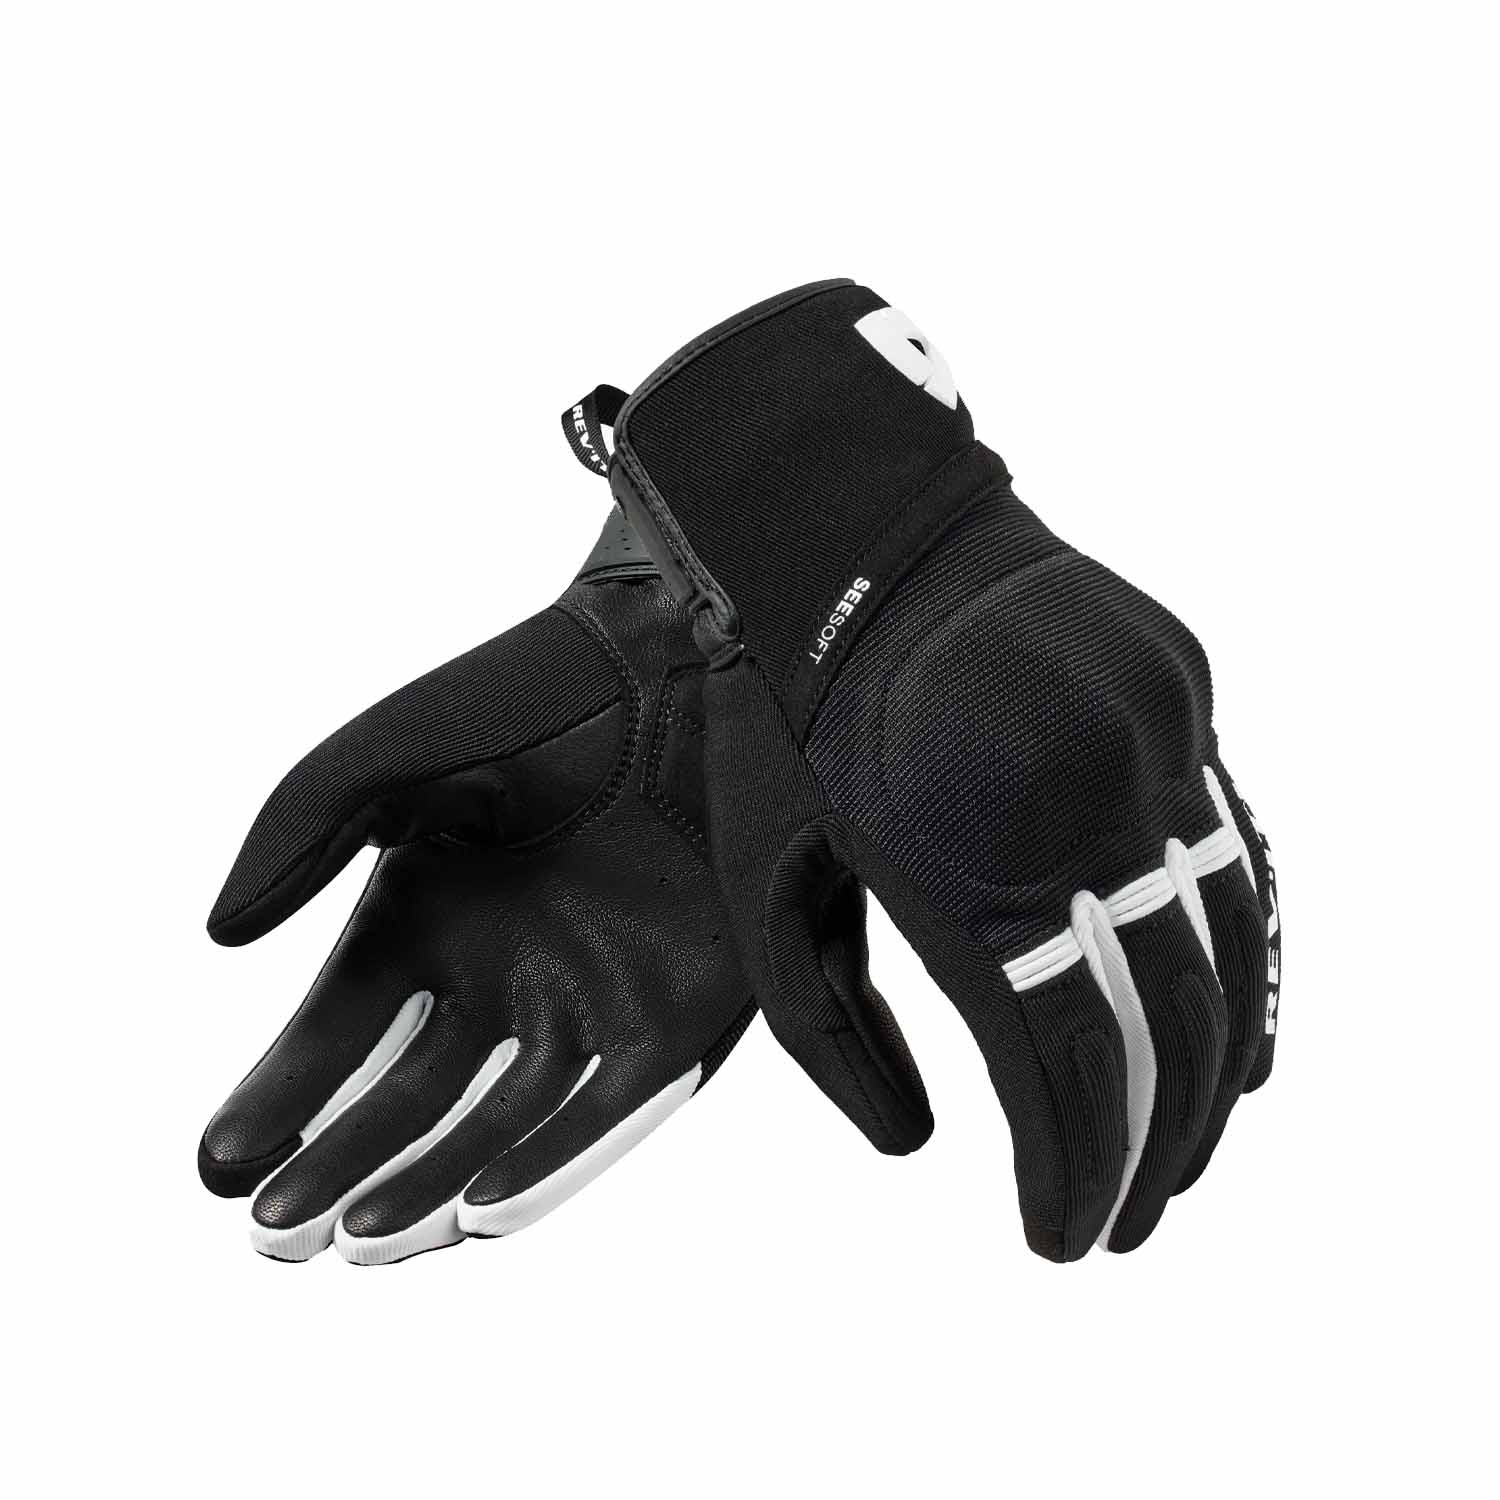 Image of EU REV'IT! Mosca 2 Gloves Black White Taille 3XL